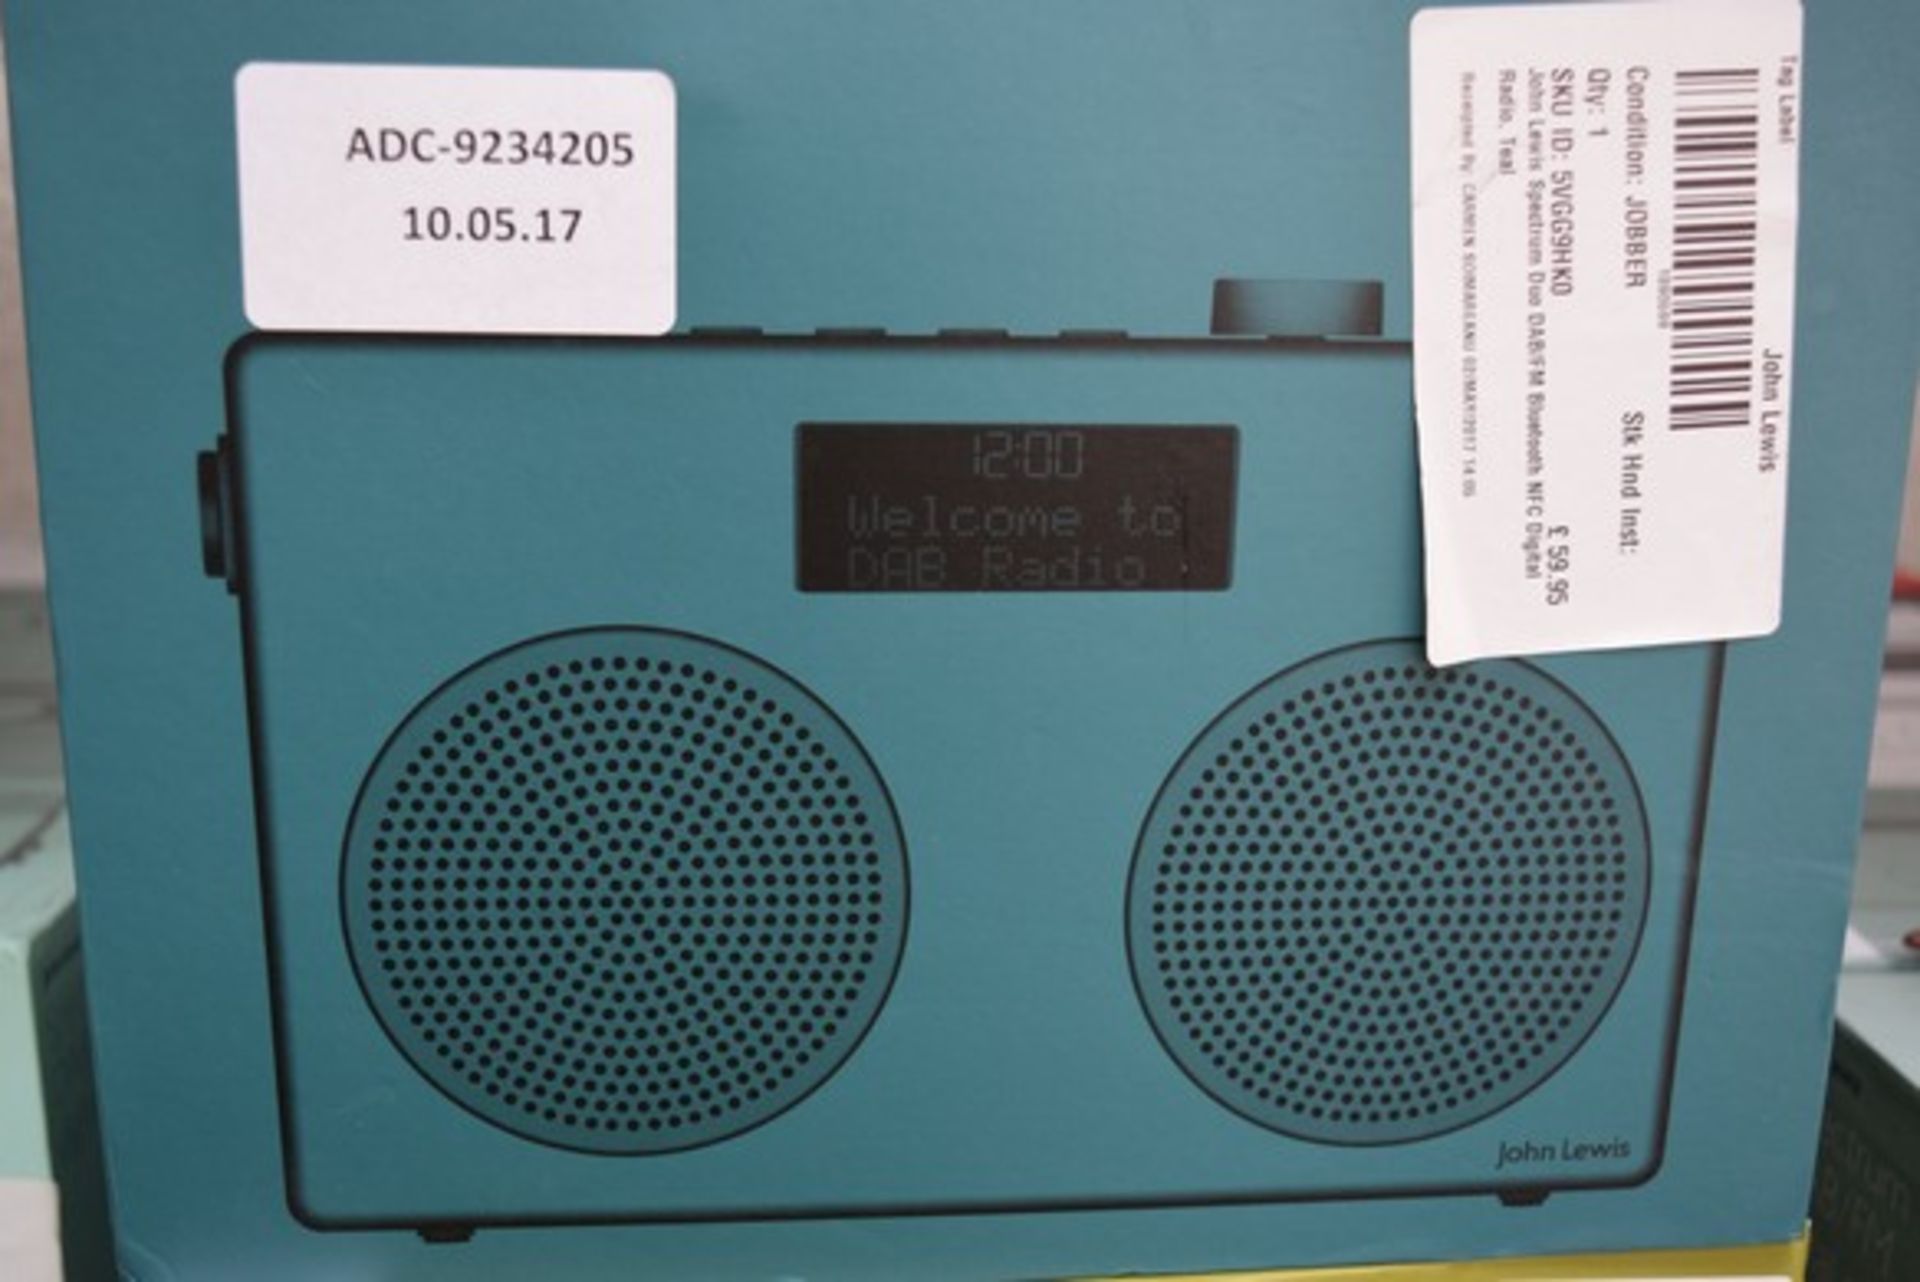 1 X BOXED JL SPECTRUM DUO DAB FM DIGITAL RADIO WITH BLUETOOTH NFC RRP £60 10.05.17